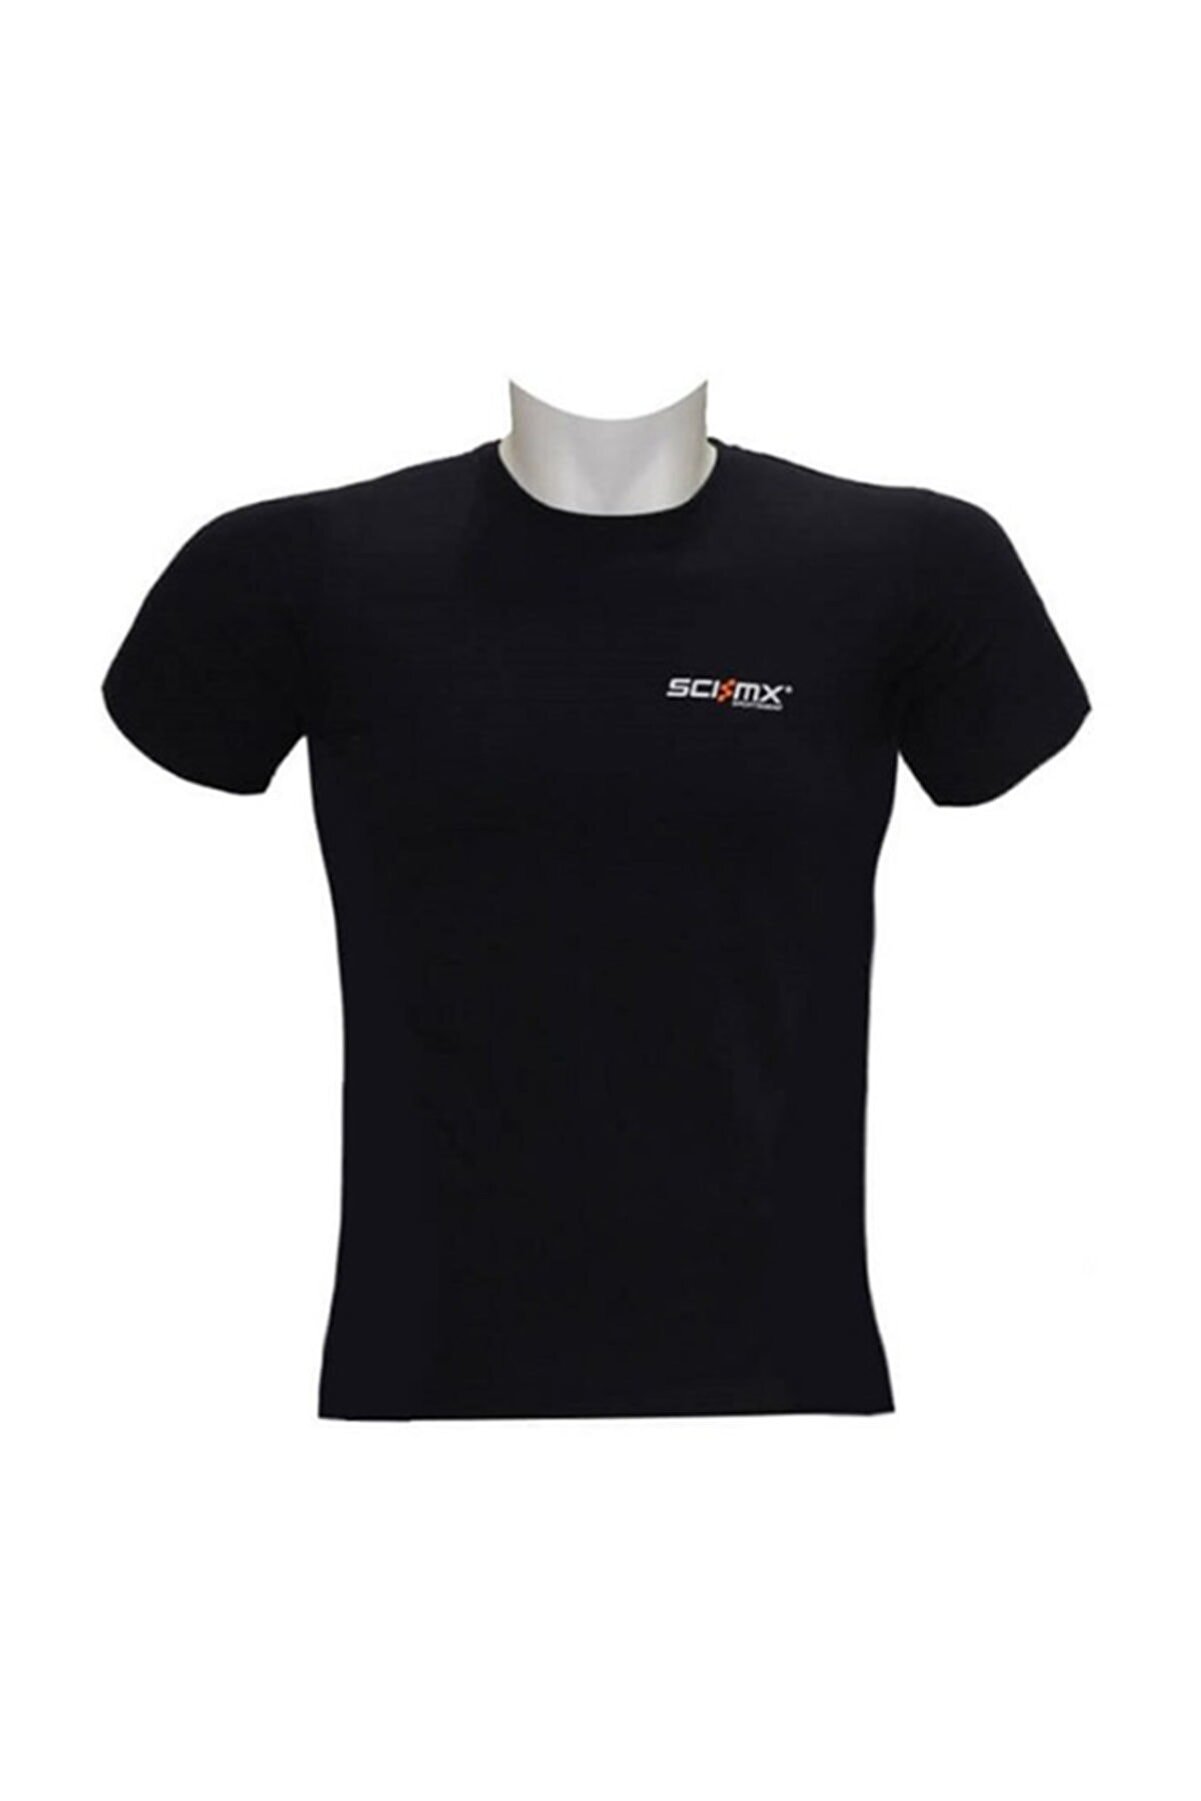 Sci Mx Sportswear T-shirt